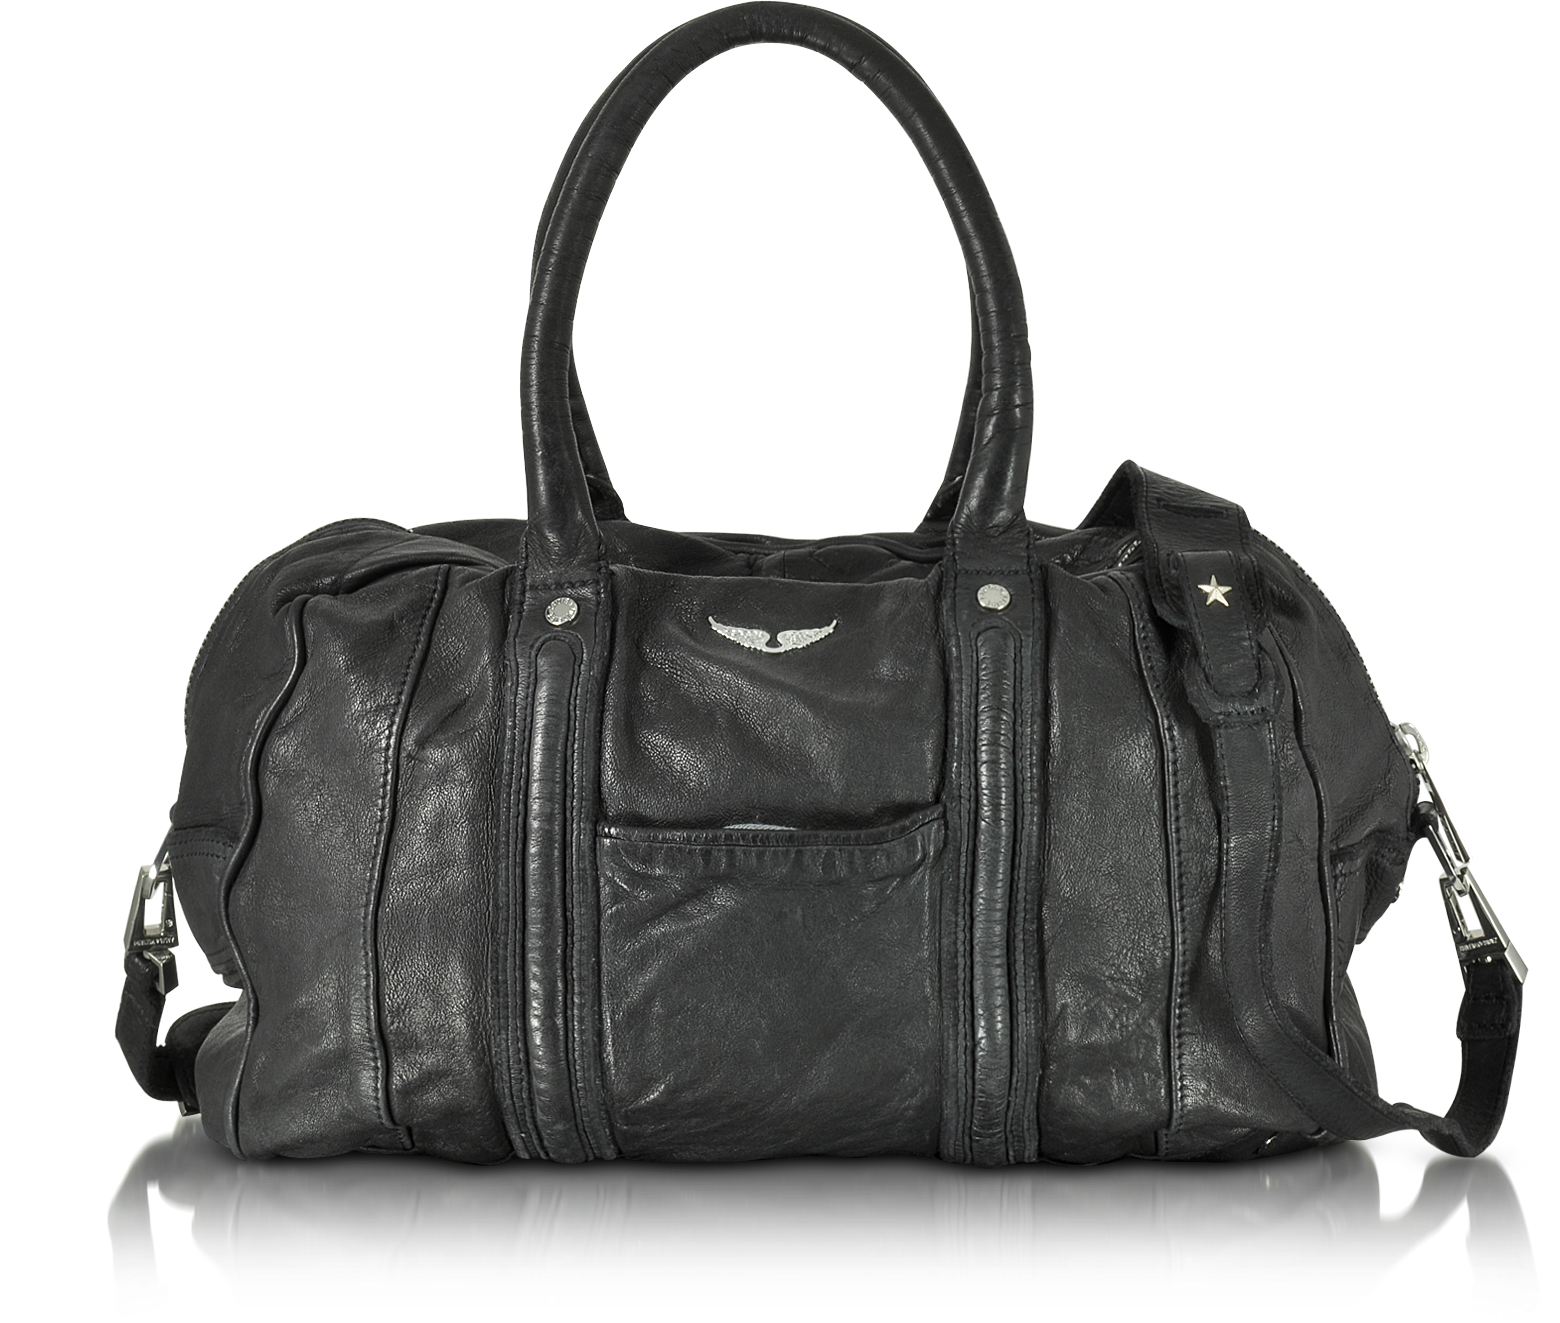 Zadig & Voltaire Beha Deep Dye Marine Leather Satchel Bag at FORZIERI